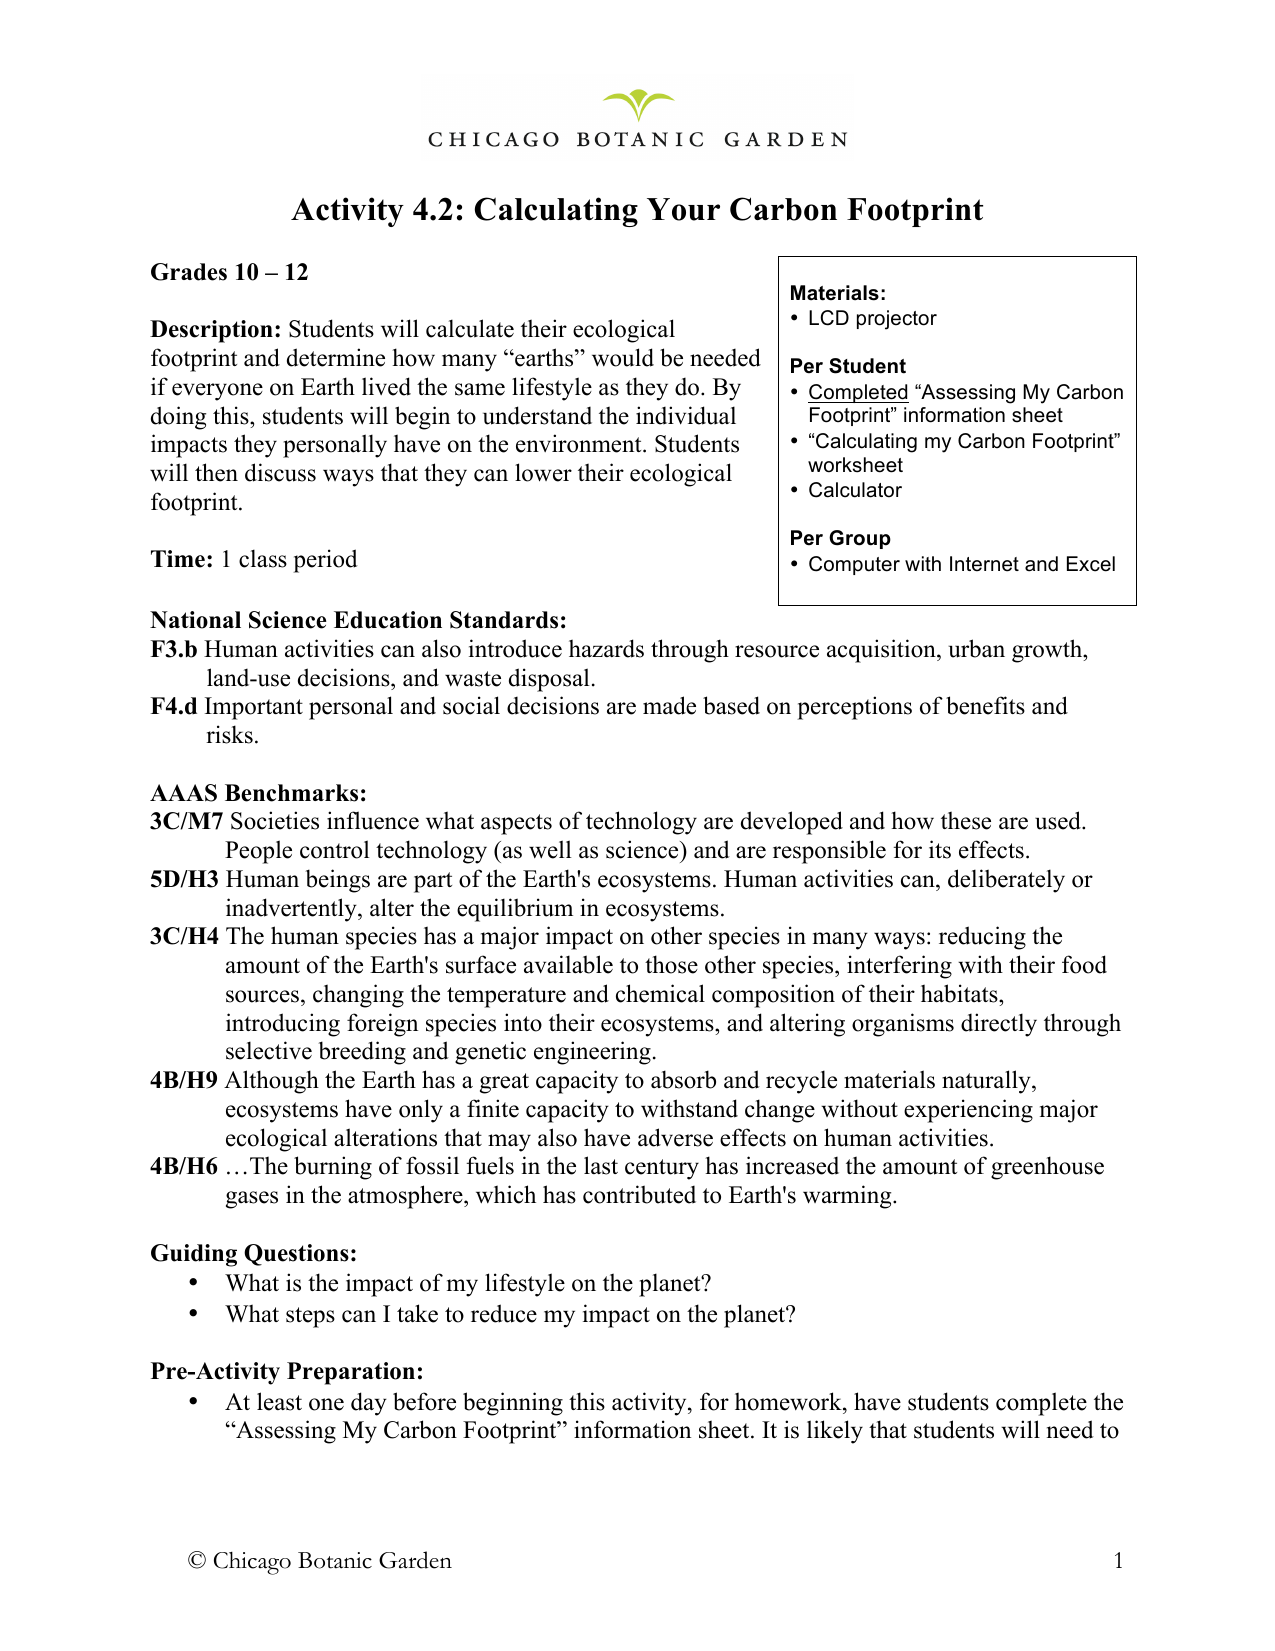 Unit 2222 Grades 2222-2222 Activity 2222.22 CalculatingYourCarbonFootprint Within Ecological Footprint Calculator Worksheet